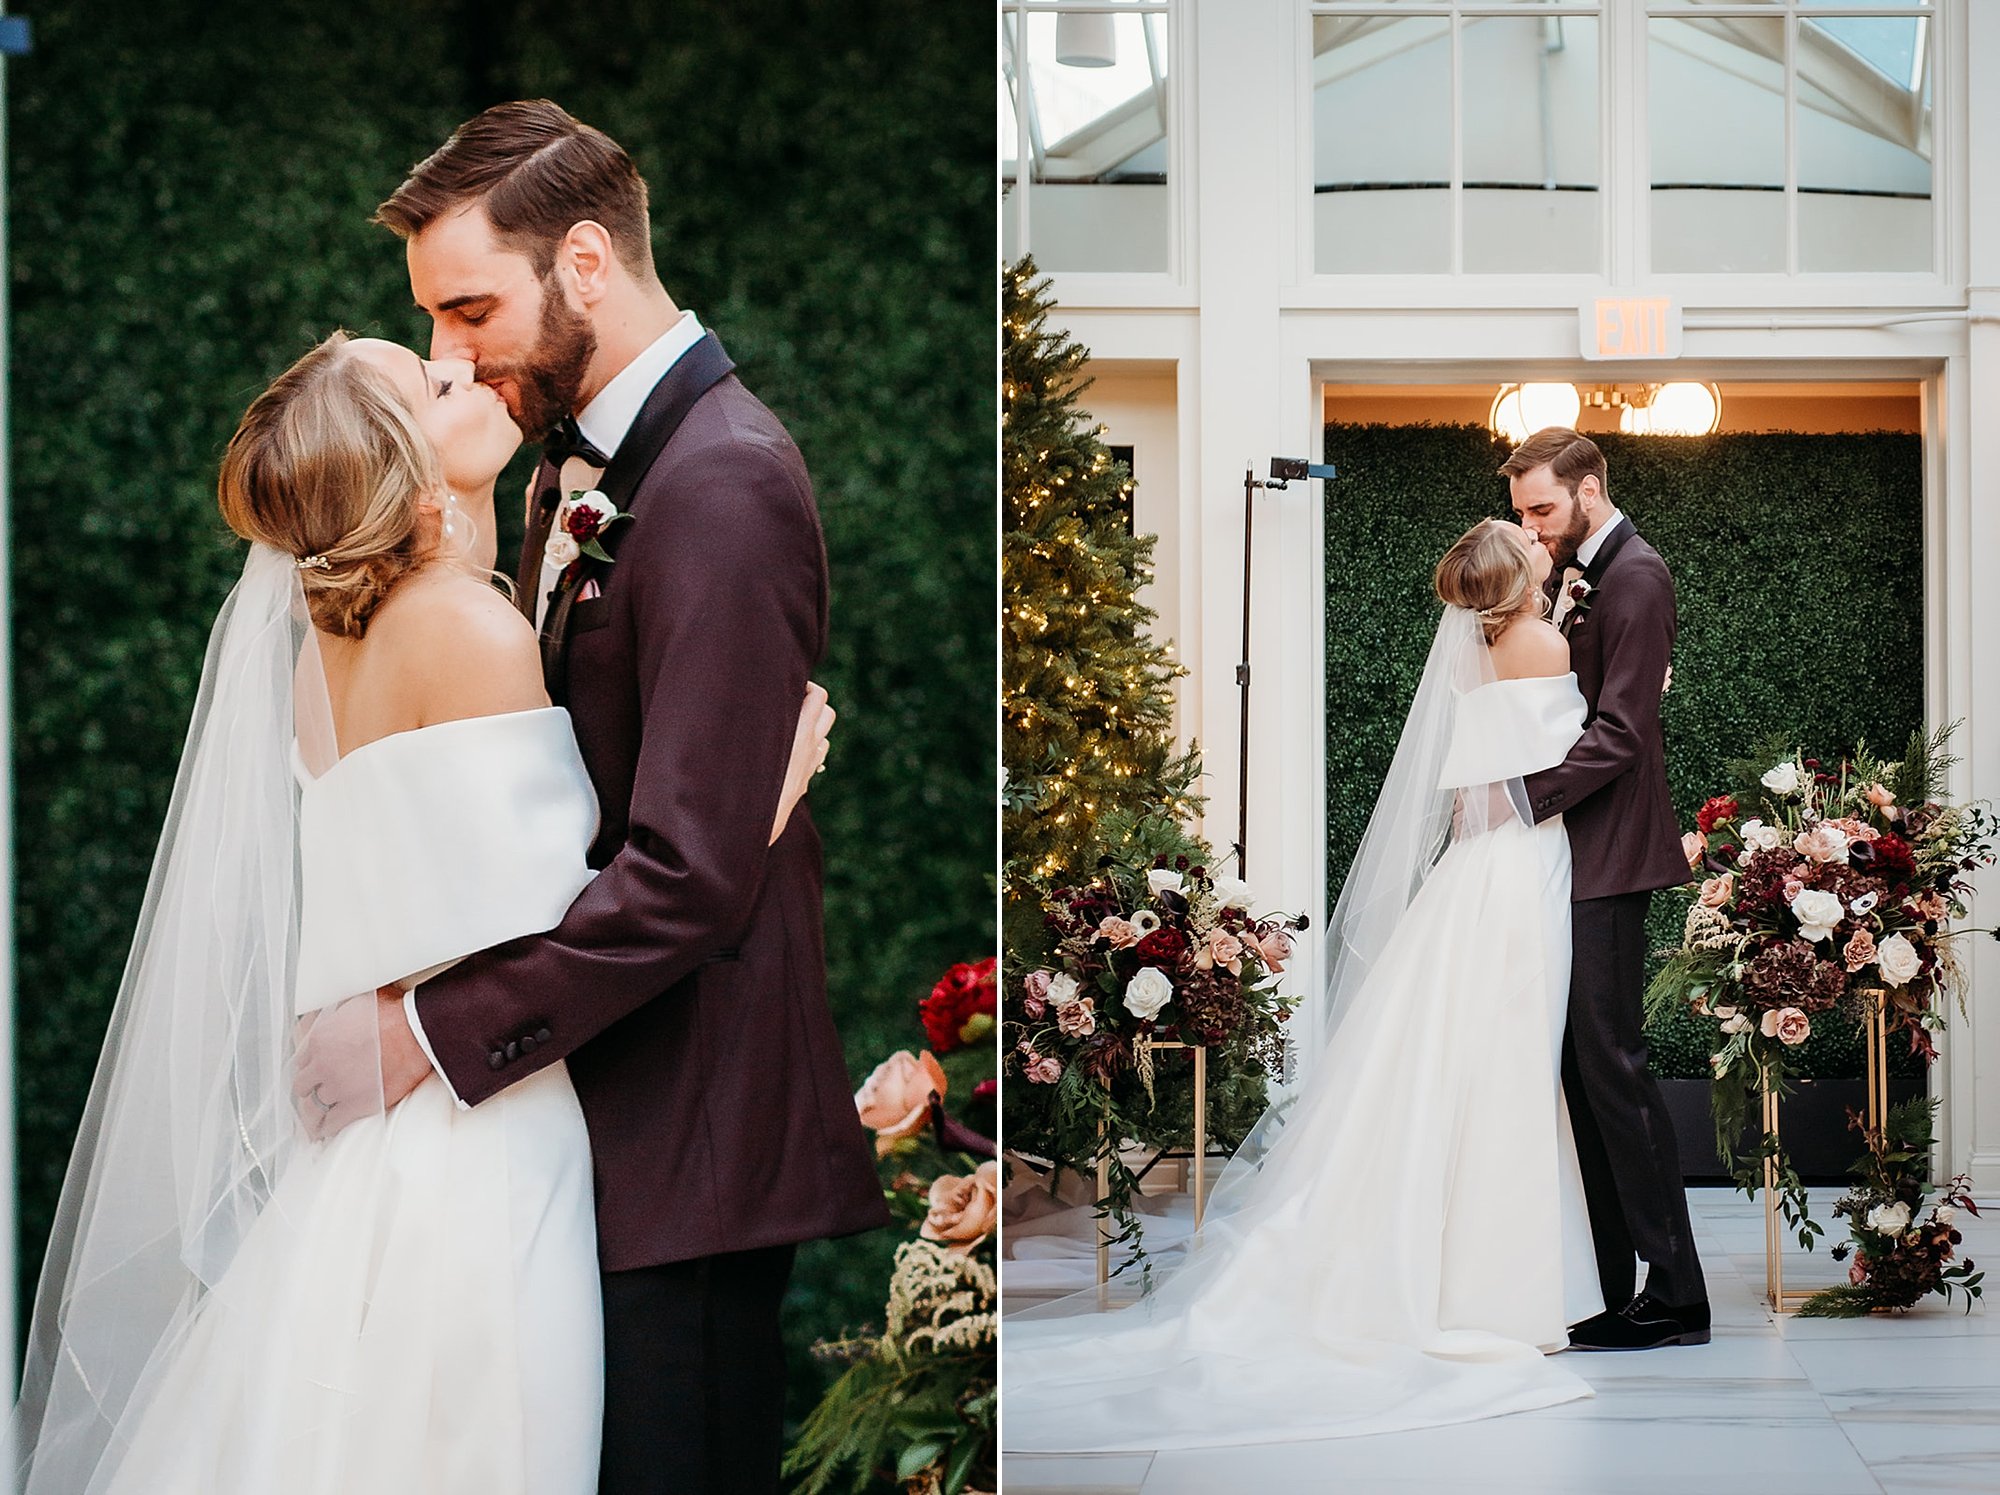 groom kisses bride during wedding ceremony in atrium at The Adelphi Hotel in Saratoga Springs NY